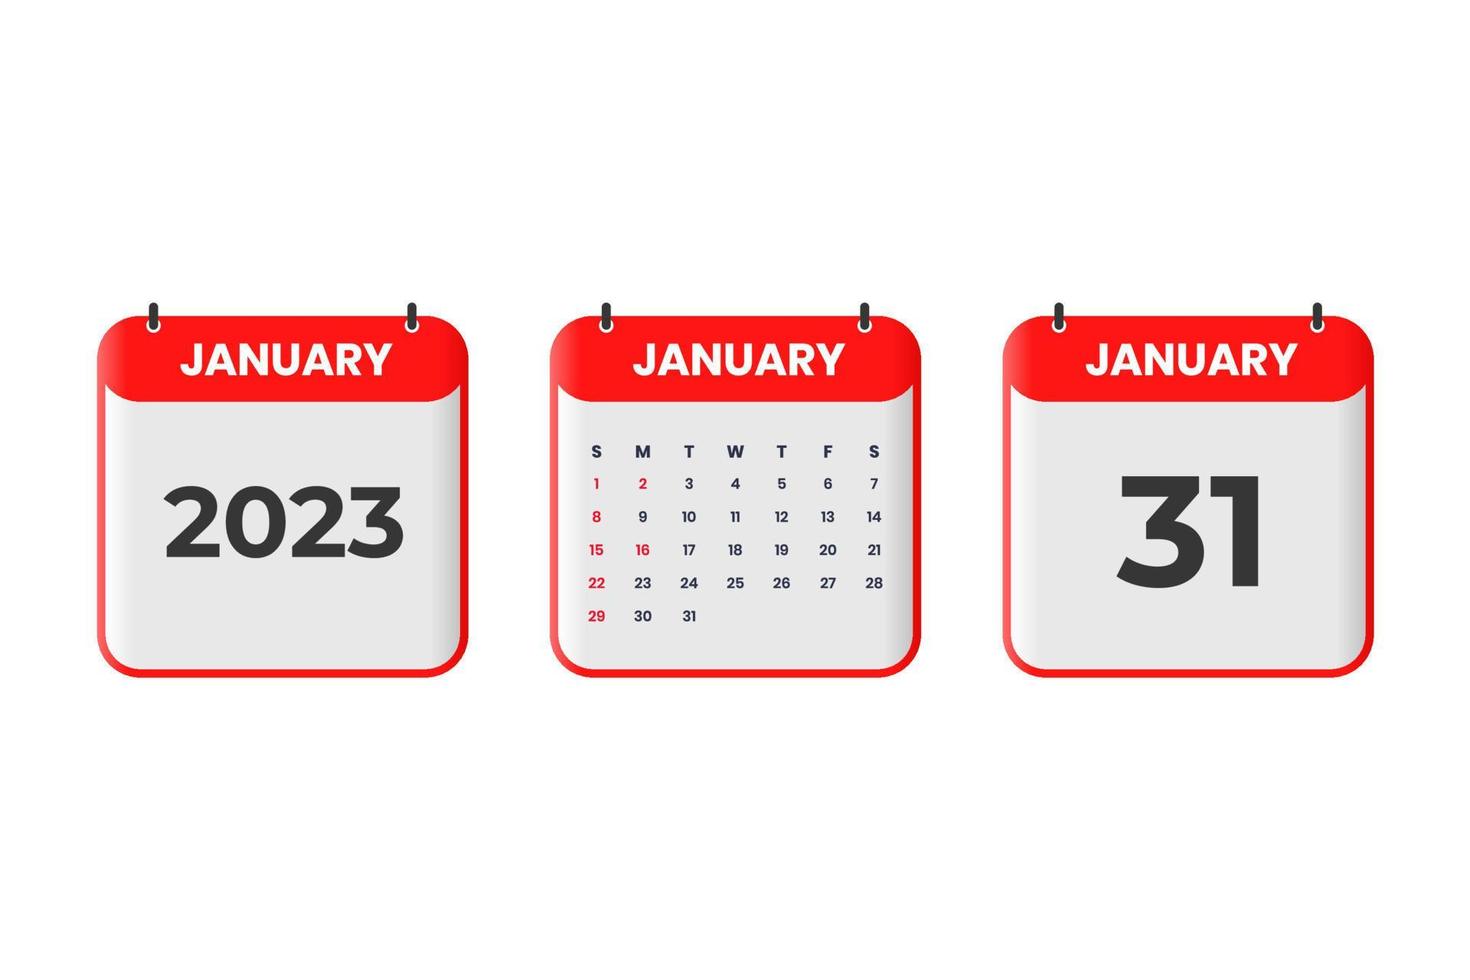 Januar 2023 Kalenderdesign. 31. Januar 2023 Kalendersymbol für Zeitplan, Termin, wichtiges Datumskonzept vektor